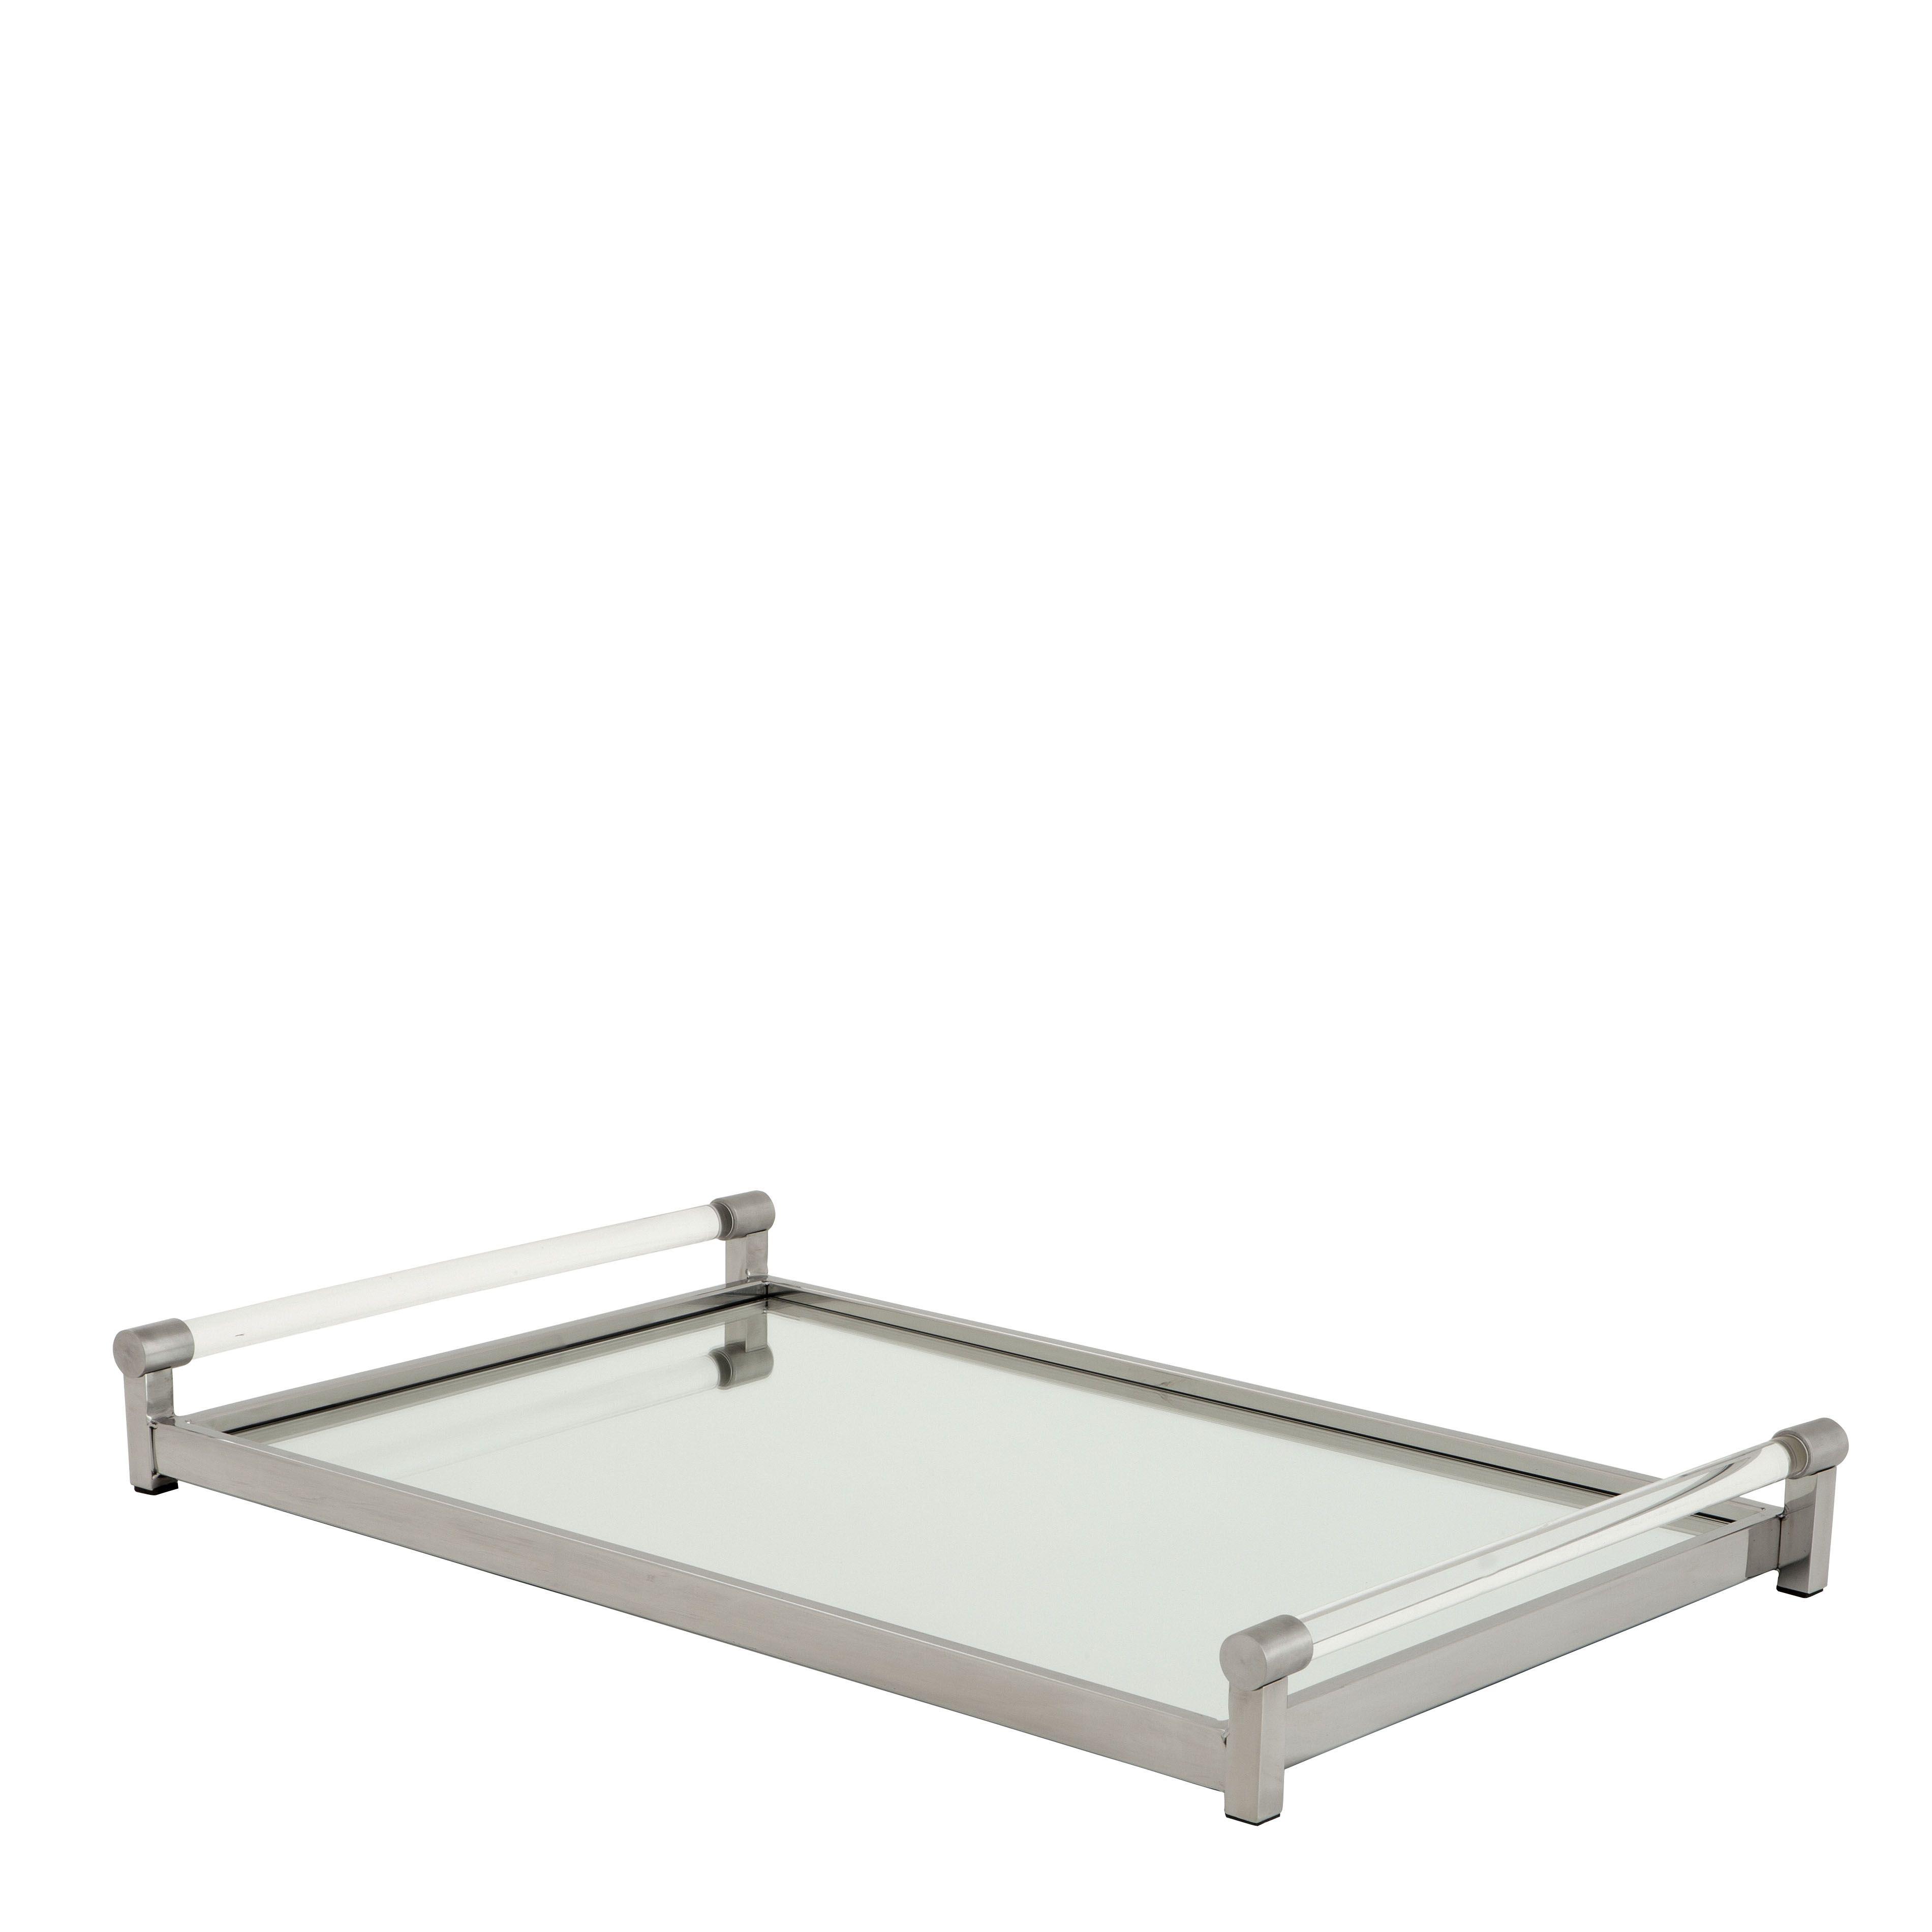 nickel finish | mirror glass | clear acrylic rectangular